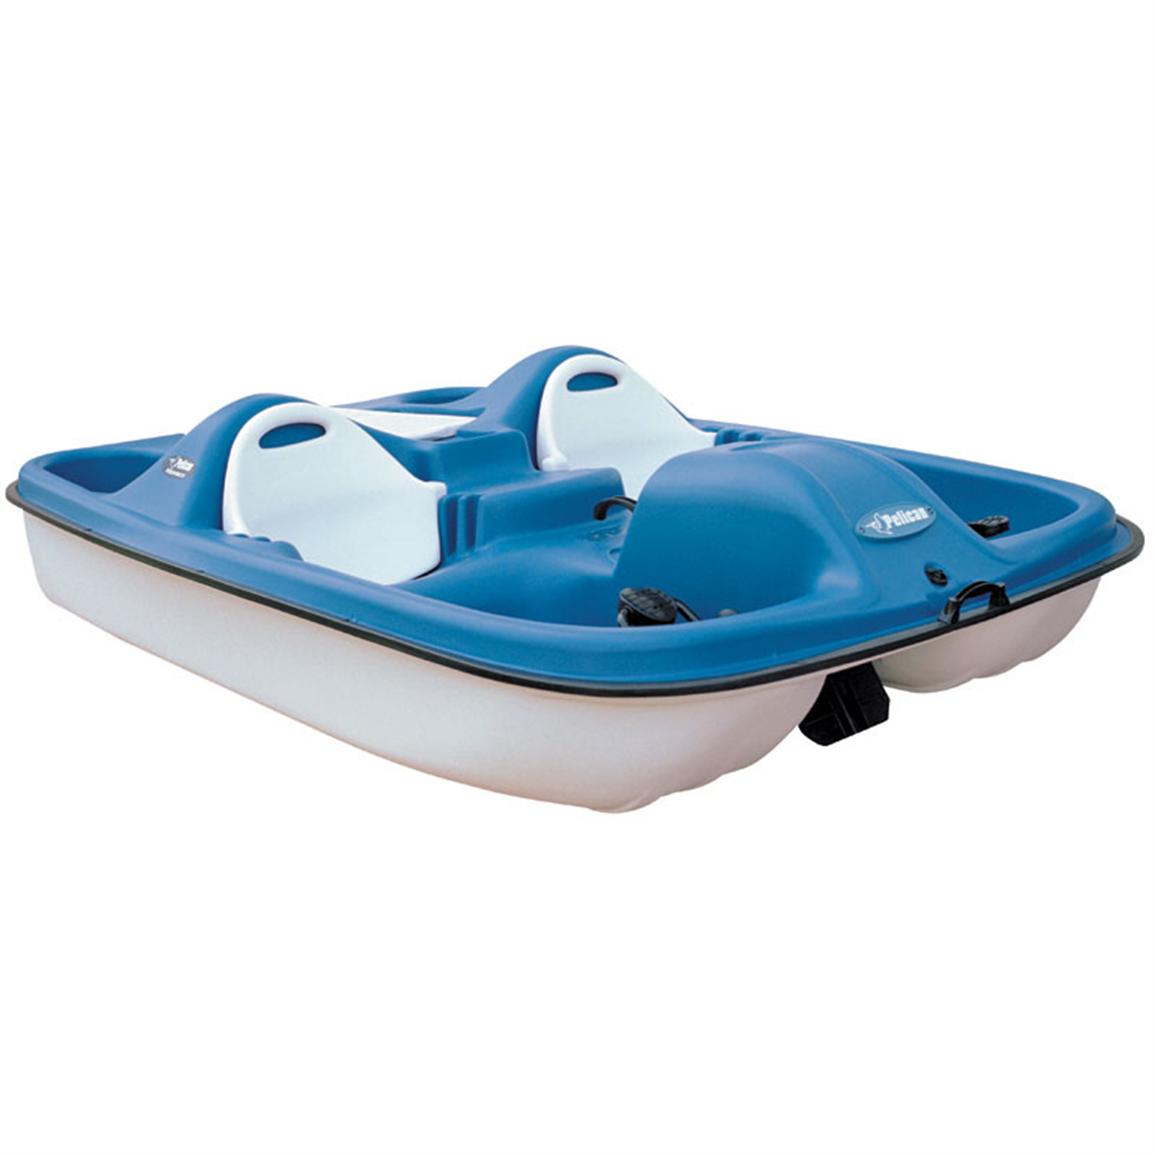 Pelican® Monaco Pedal Boat 88252, Boats at Sportsman's Guide